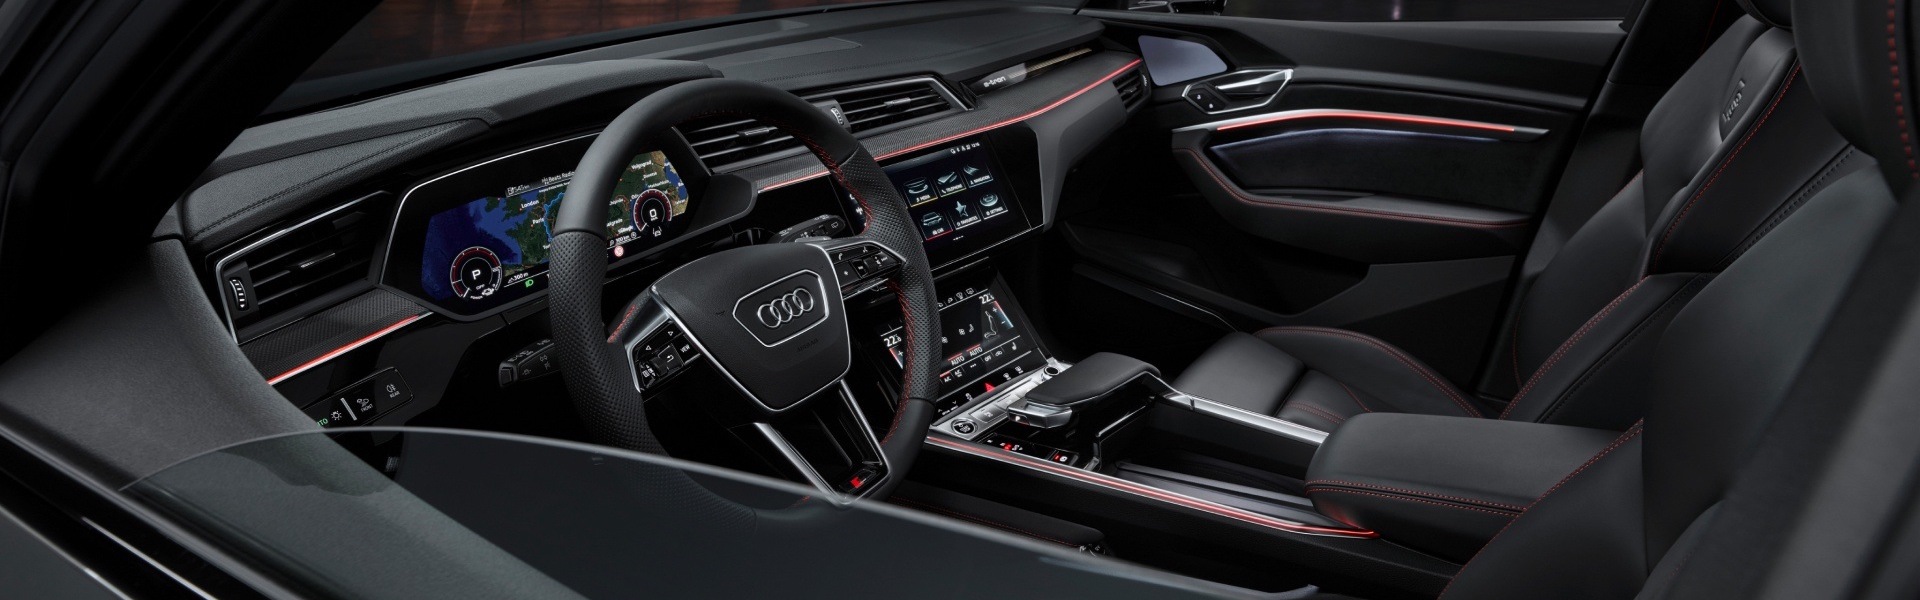 Notranjost vozila Audi Q8 e-tron